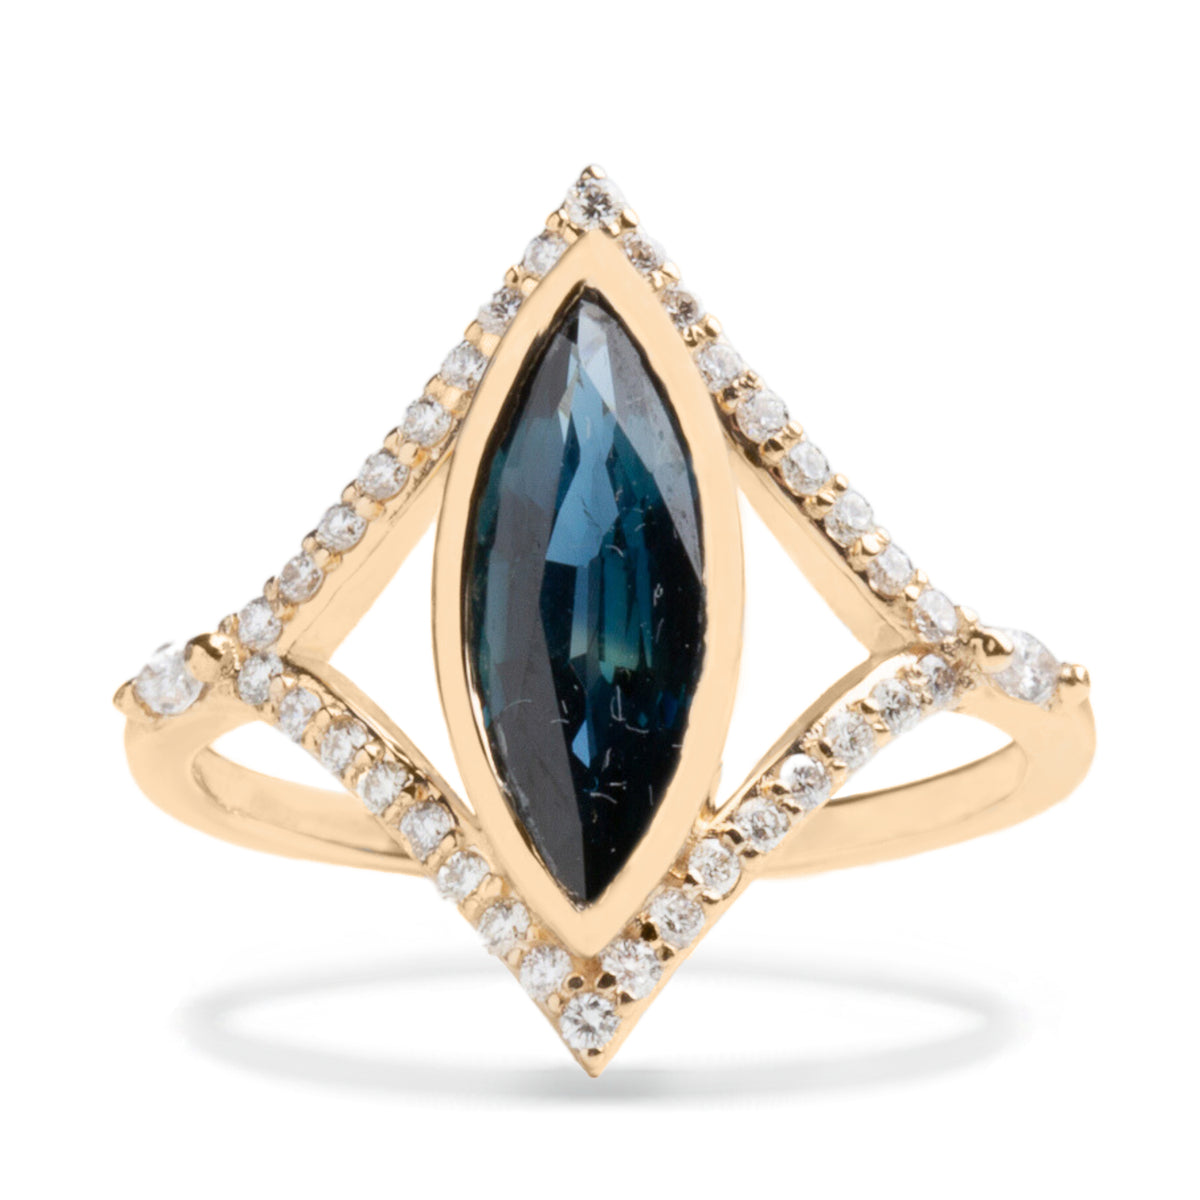 13.4ct marquise cut blue sapphire bezel set with diamond pave split shank 14k yellow gold gemstone ring